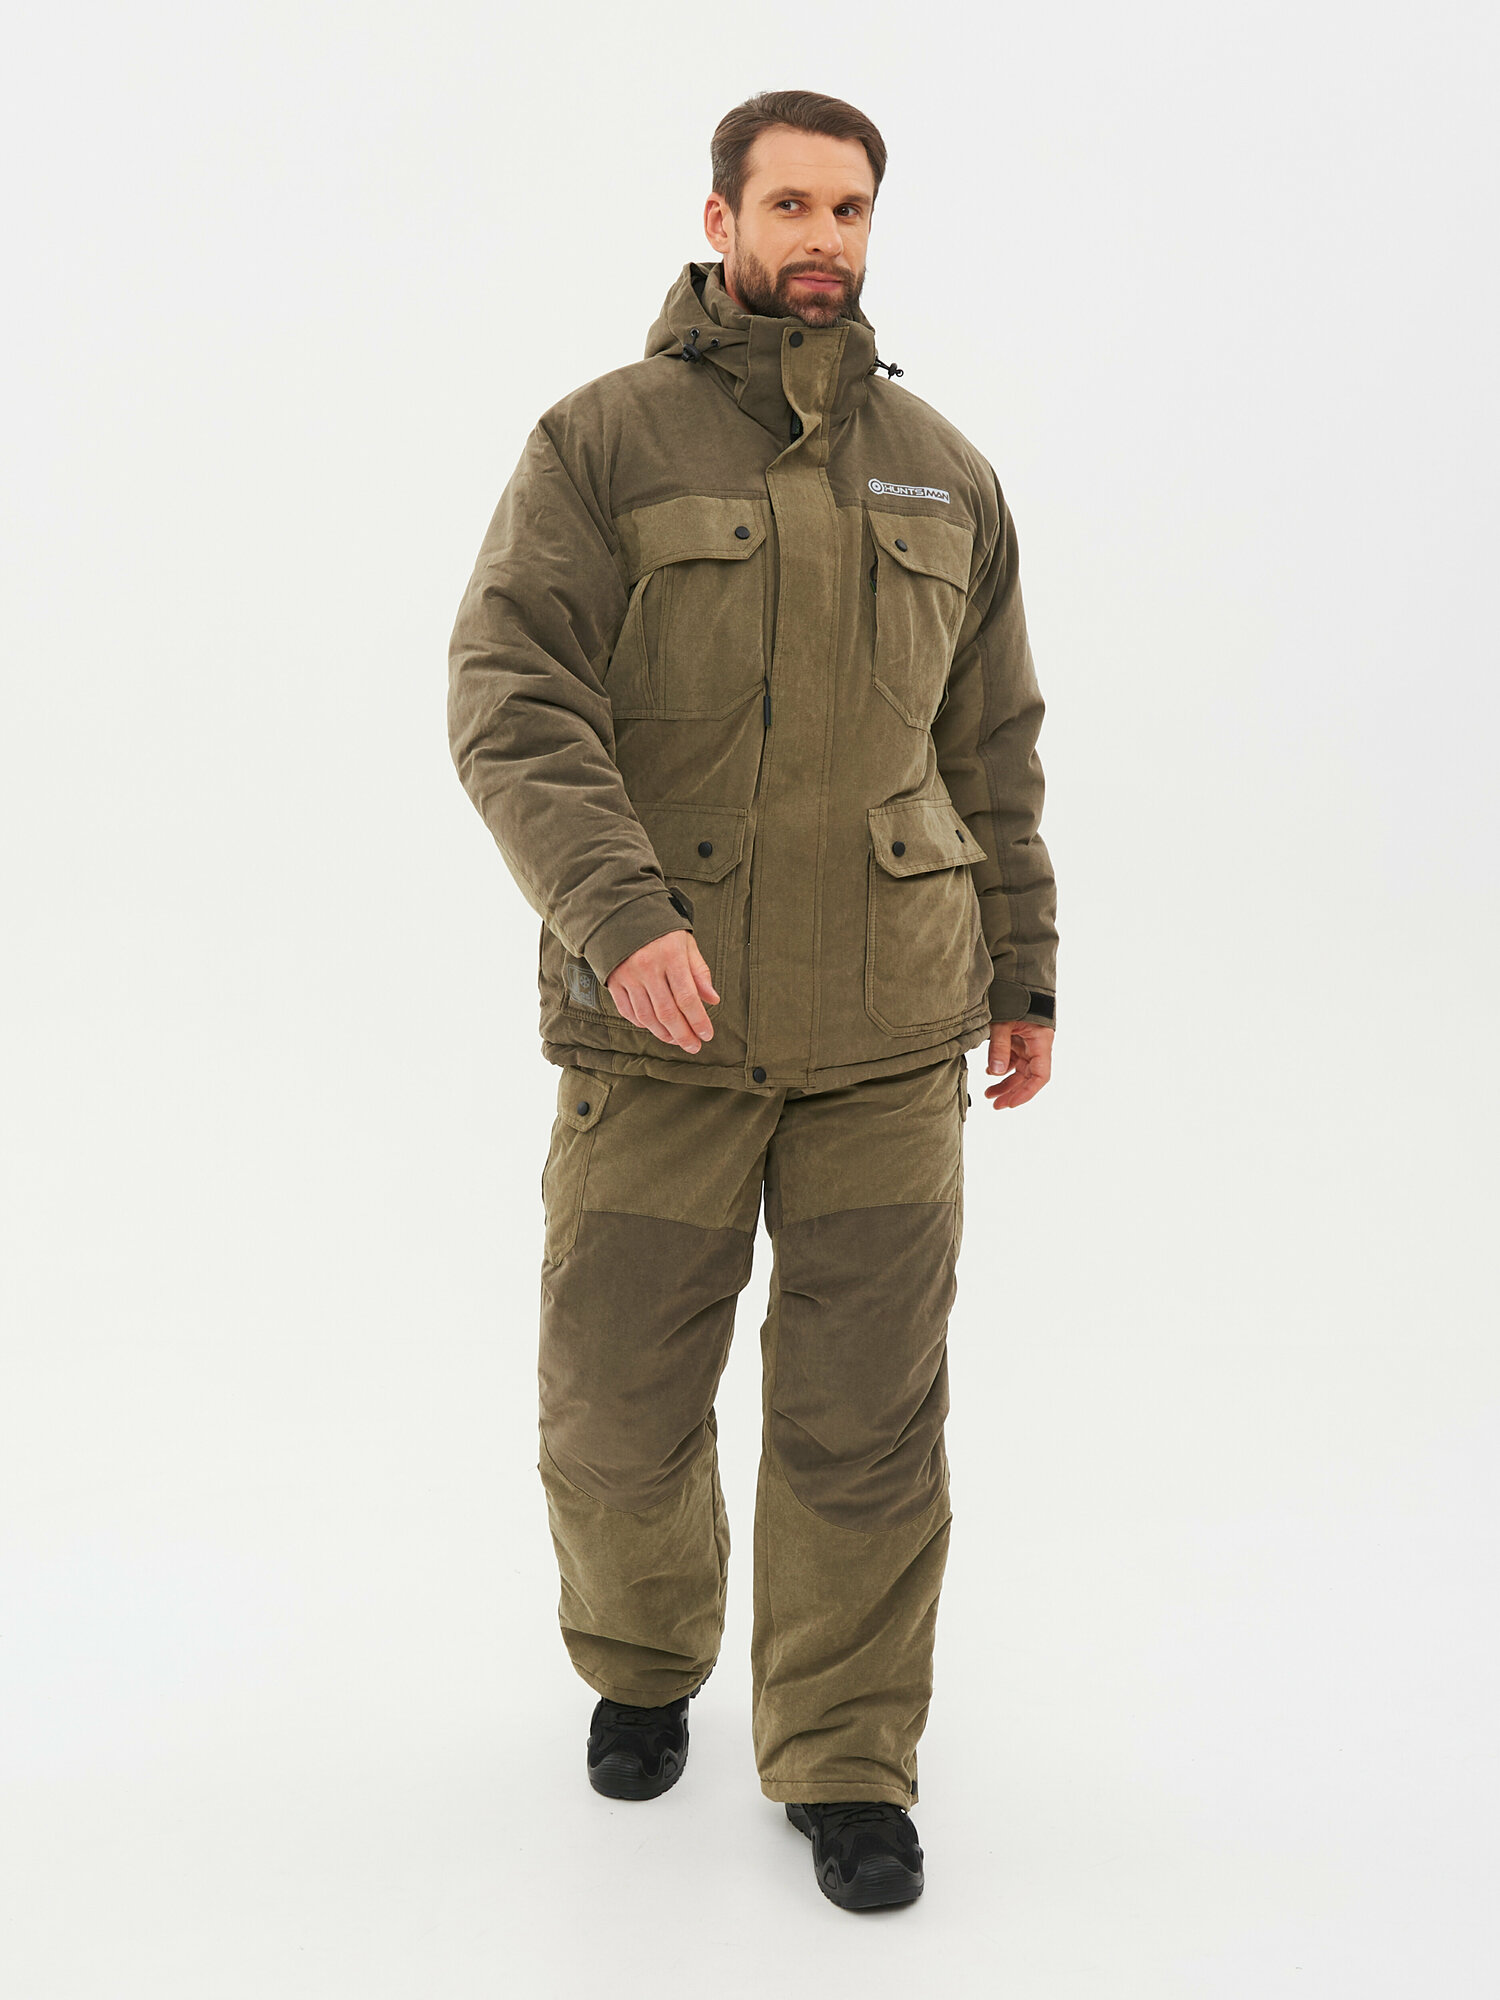 Костюм зимний Huntsman "Канада", размер 52-54, рост 170-176 см, ткань Finlandia, цвет хаки